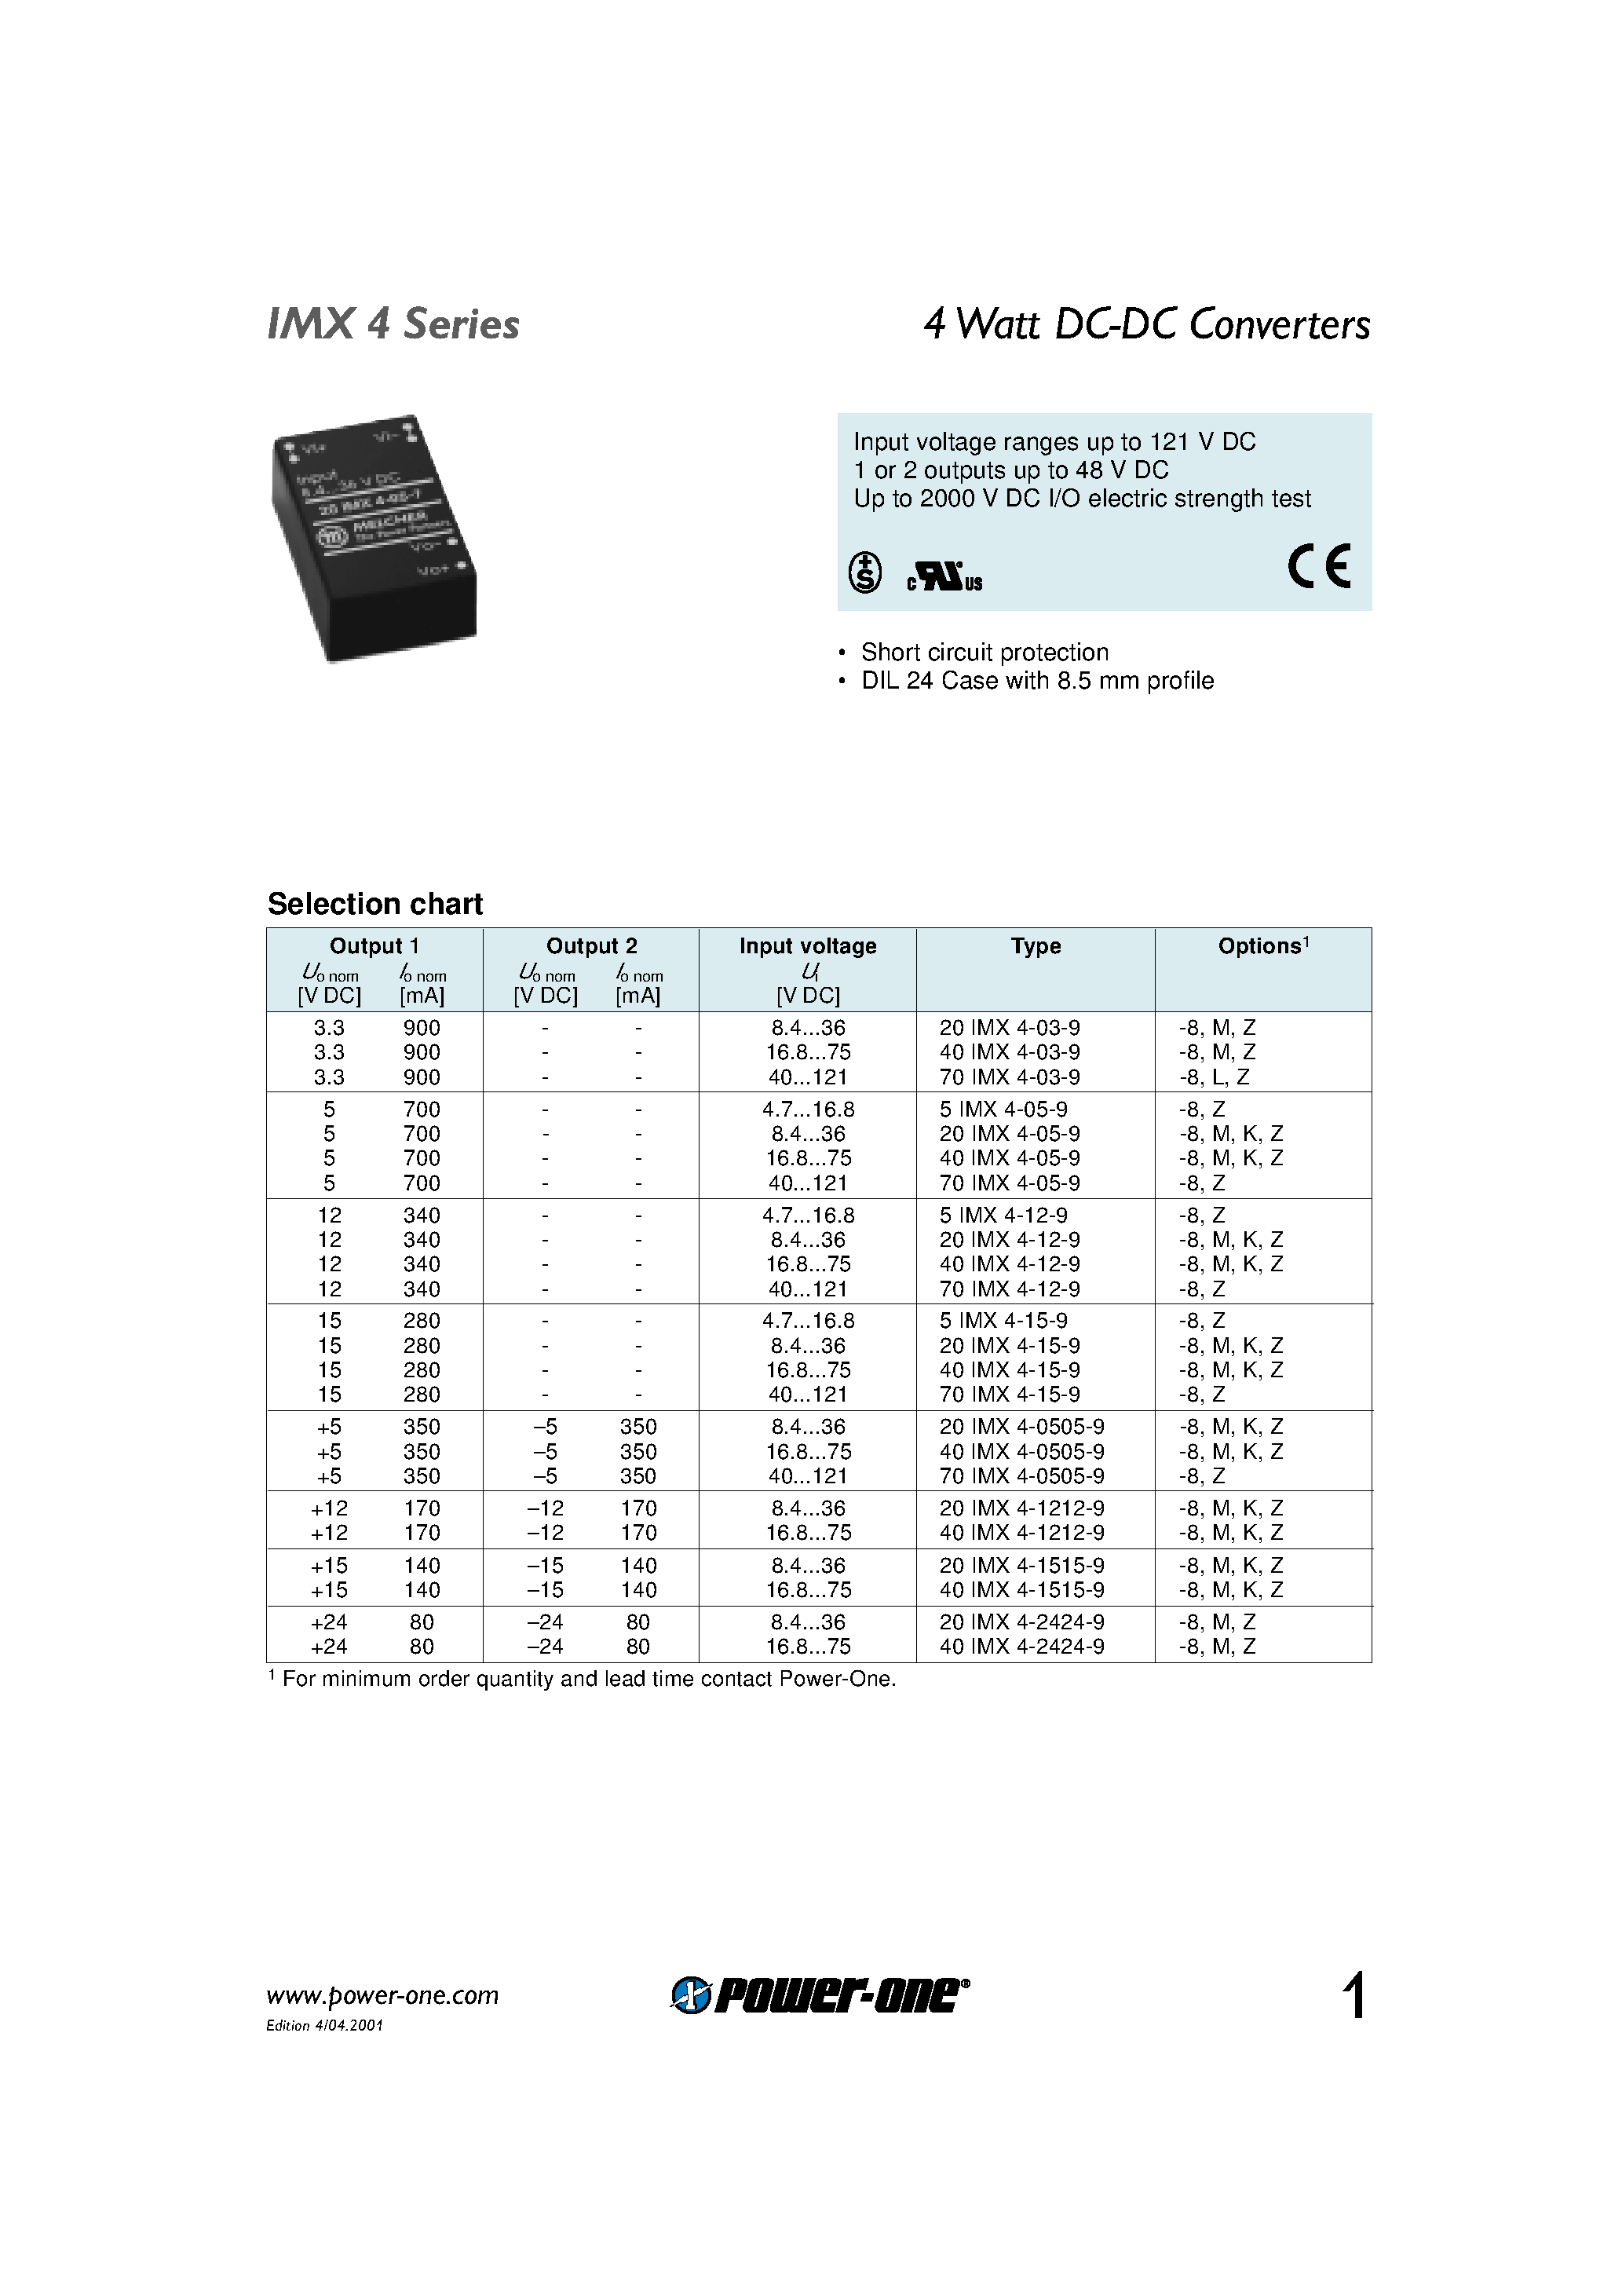 Datasheet 40IMX4-12-9 - 4 Watt DC-DC Converters page 1